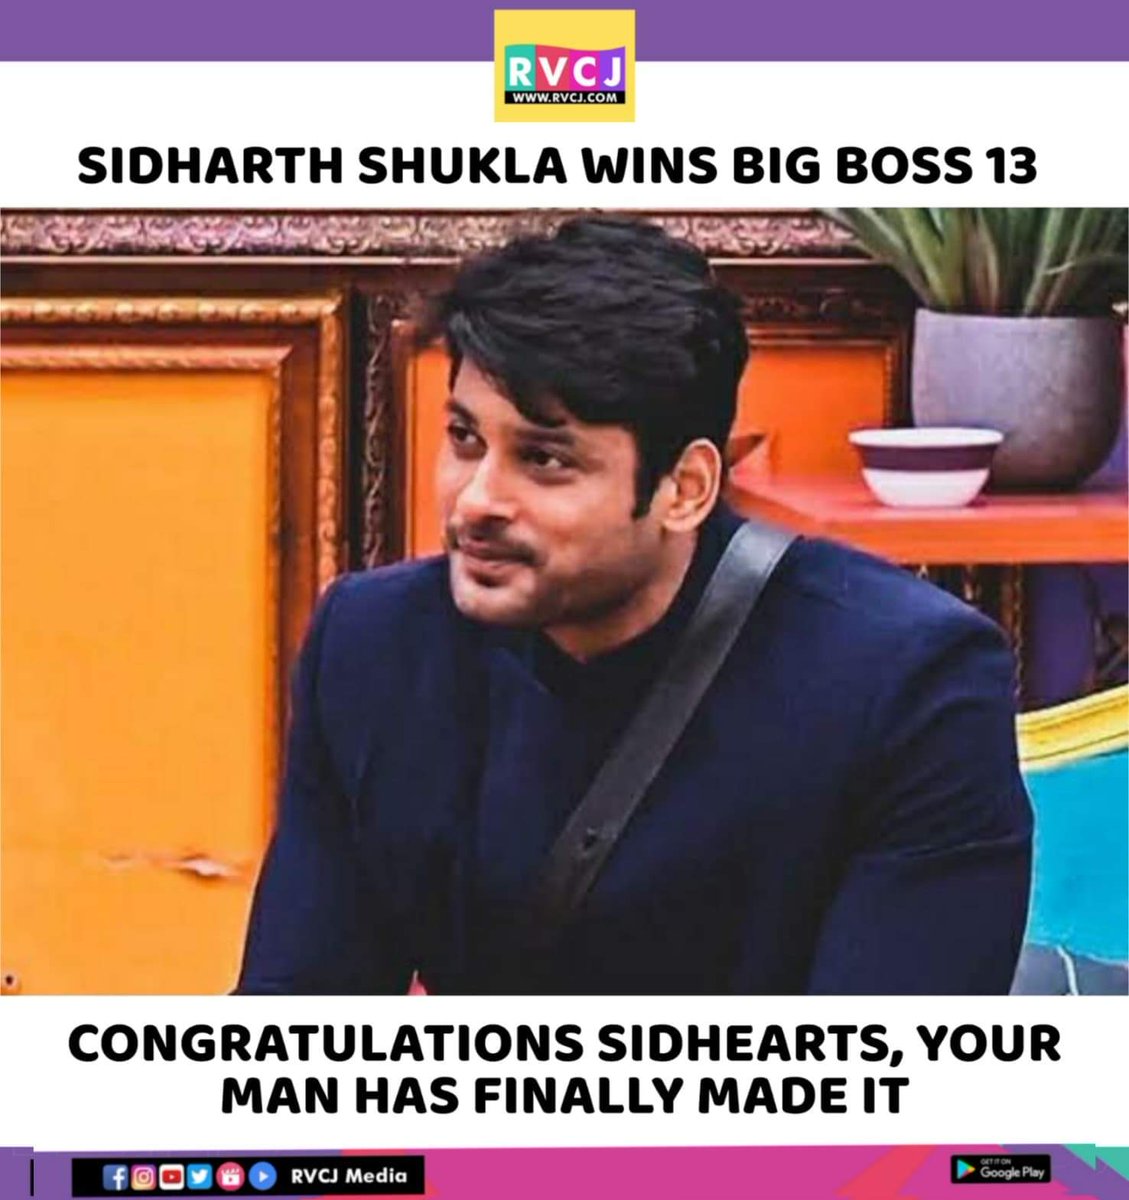 Congratulations! Sidharth Shukla!
#SidharthShukla #Sid #SidShukla #BigBossFinale #BB13 #BigBoss13